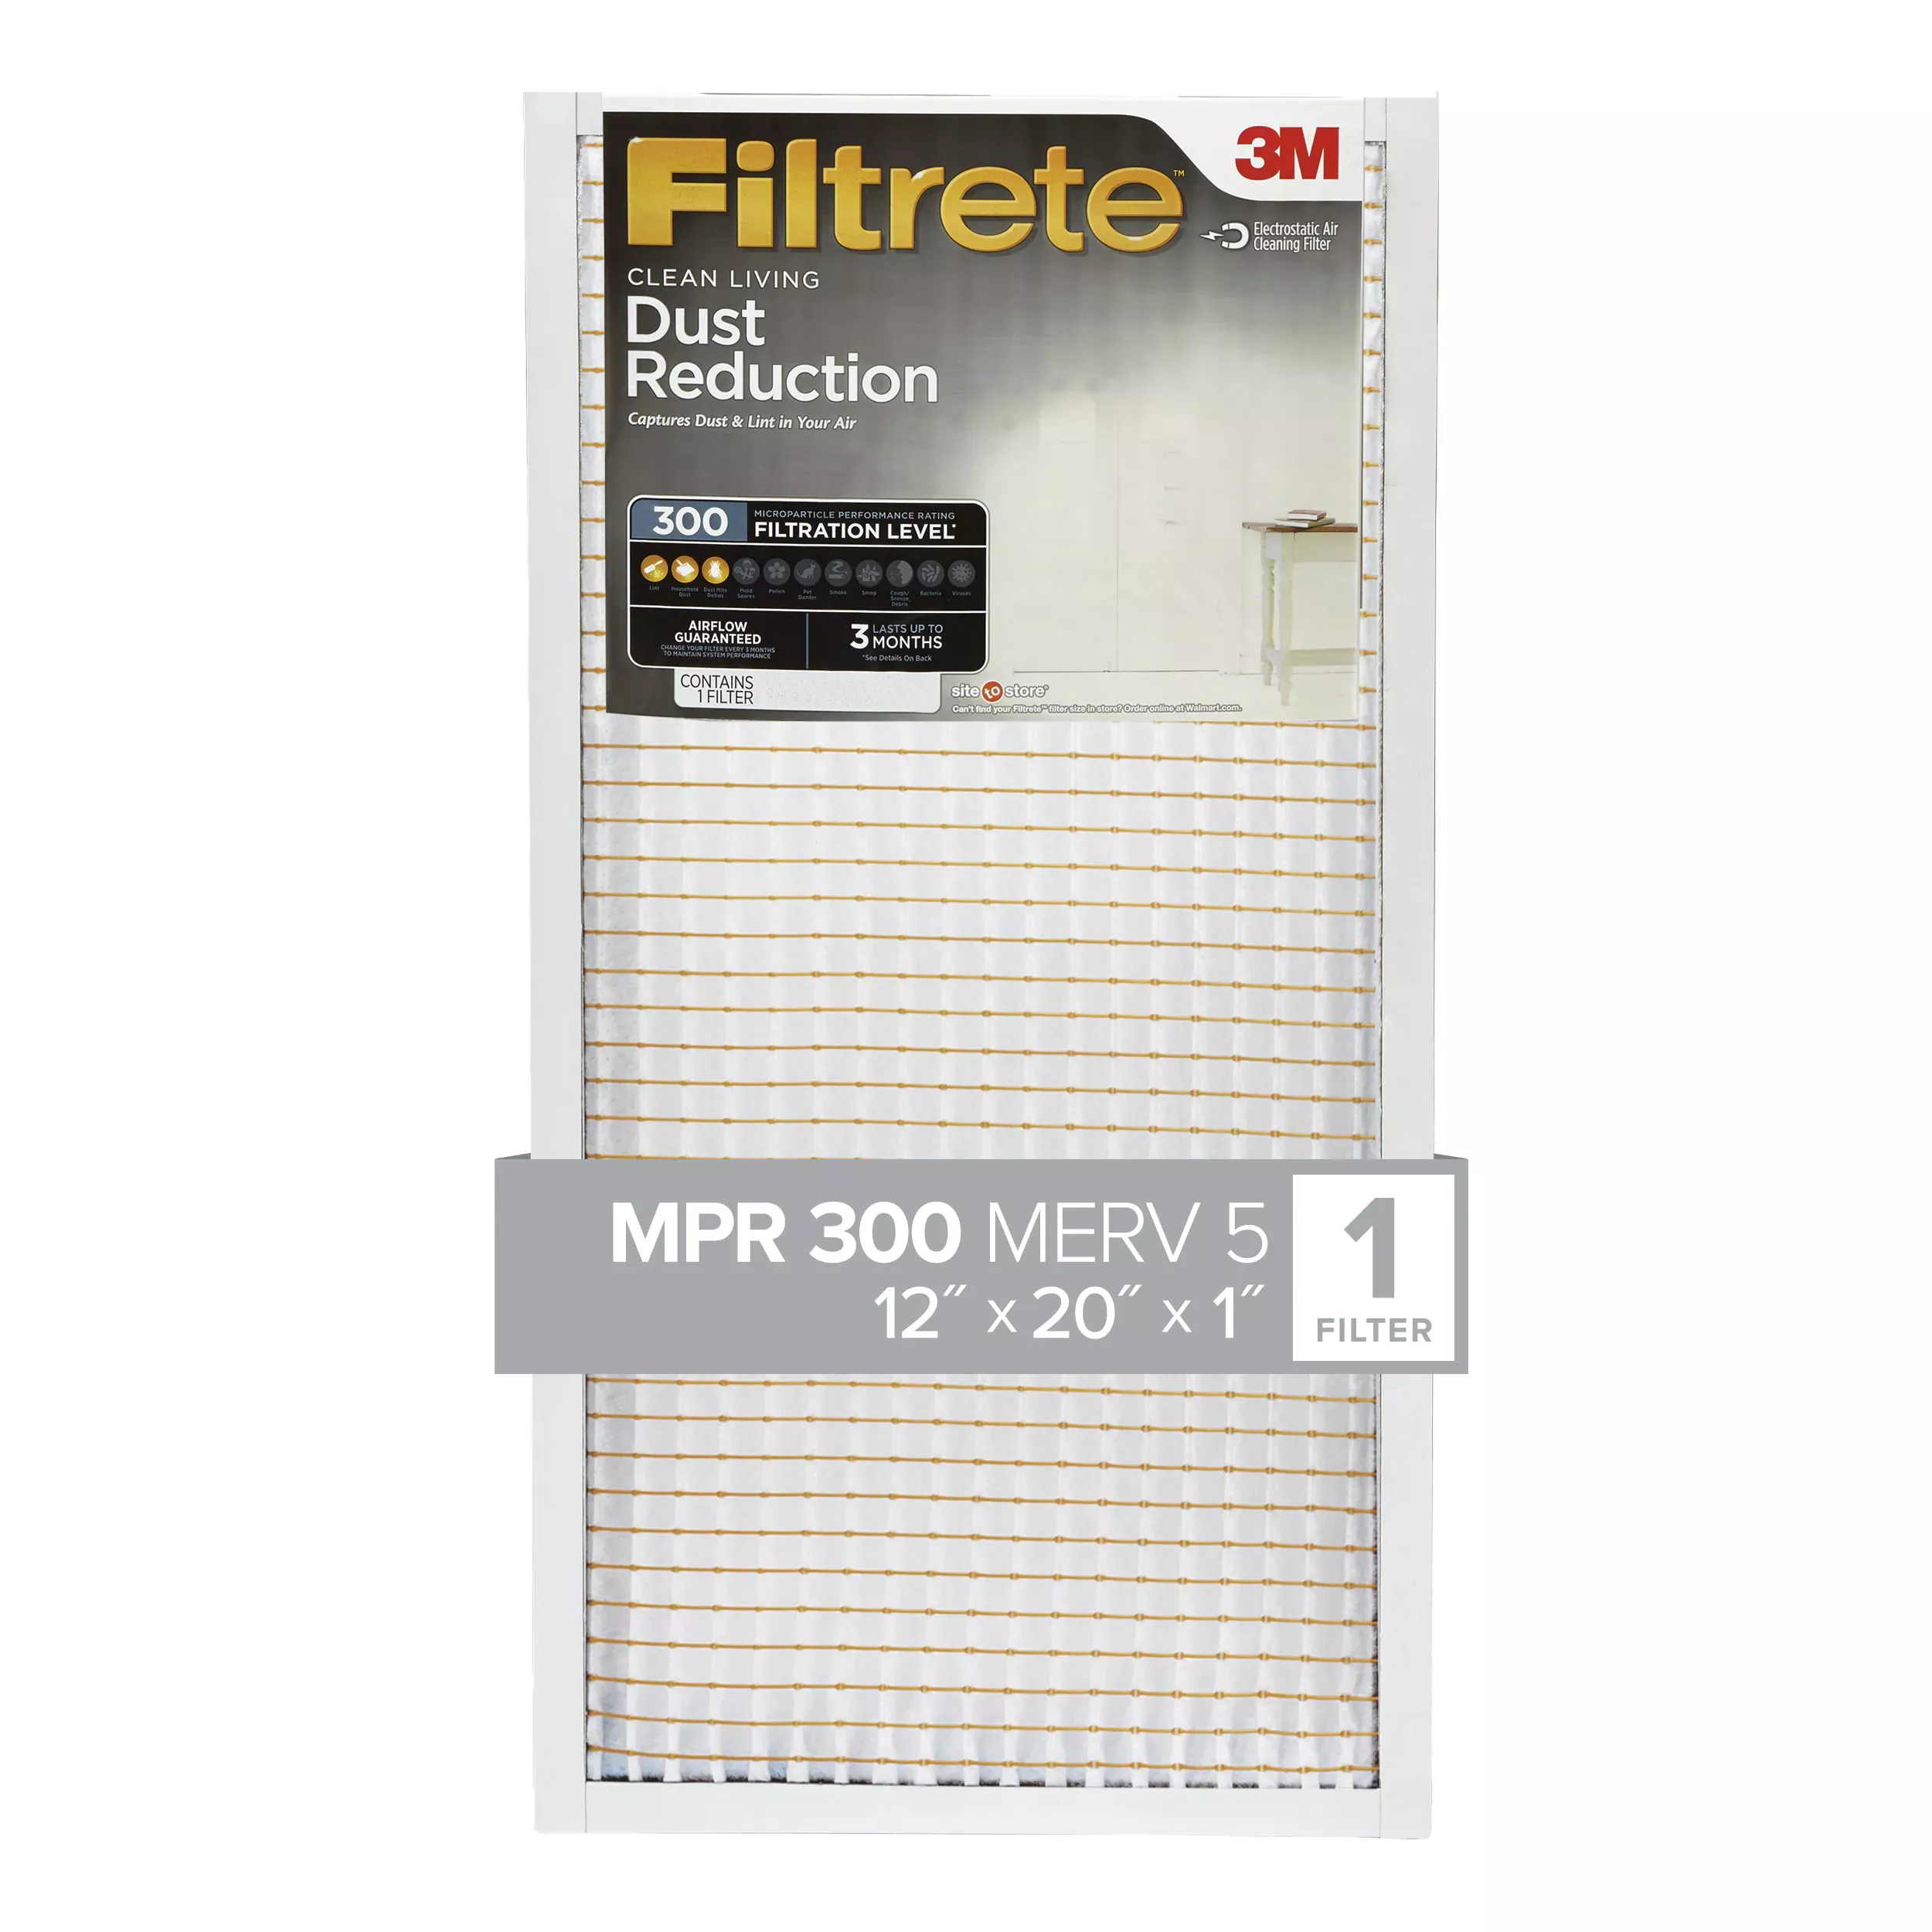 Filtrete™ Dust Reduction Filter 319-4, 12 in x 20 in x 1 in (30.4 cm x
50.8 cm x 2.5 cm)